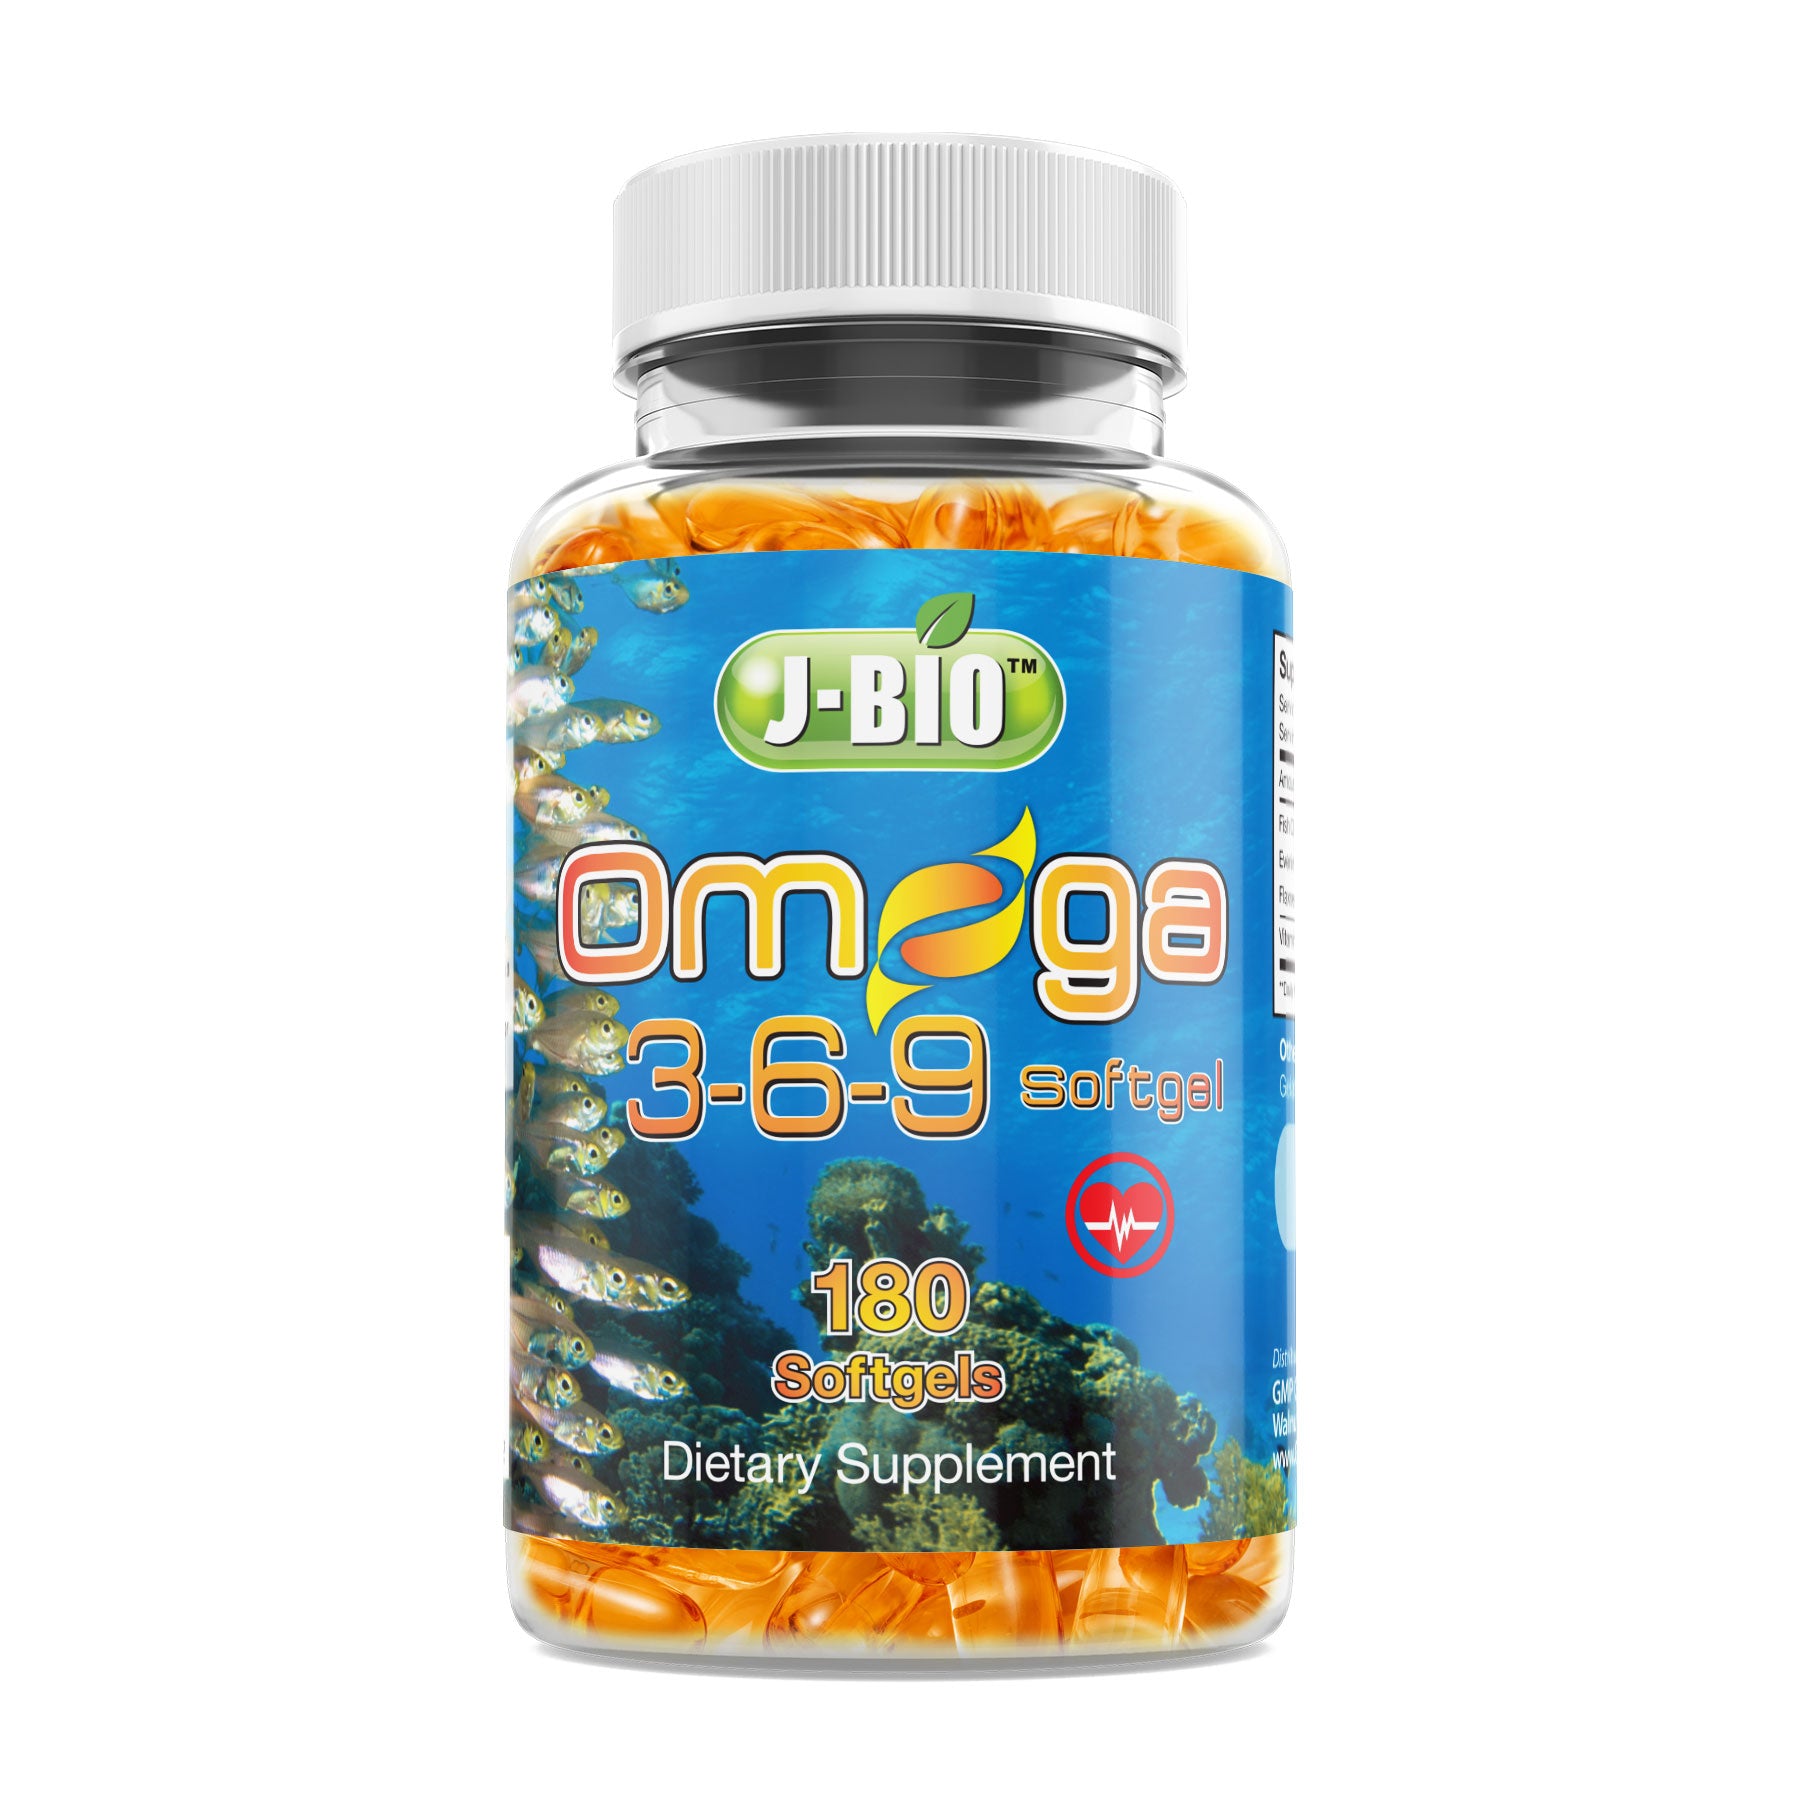 J-Bio Omega 3-6-9 Fish Oil with Organic Flaxseed Oil 180 Softgels